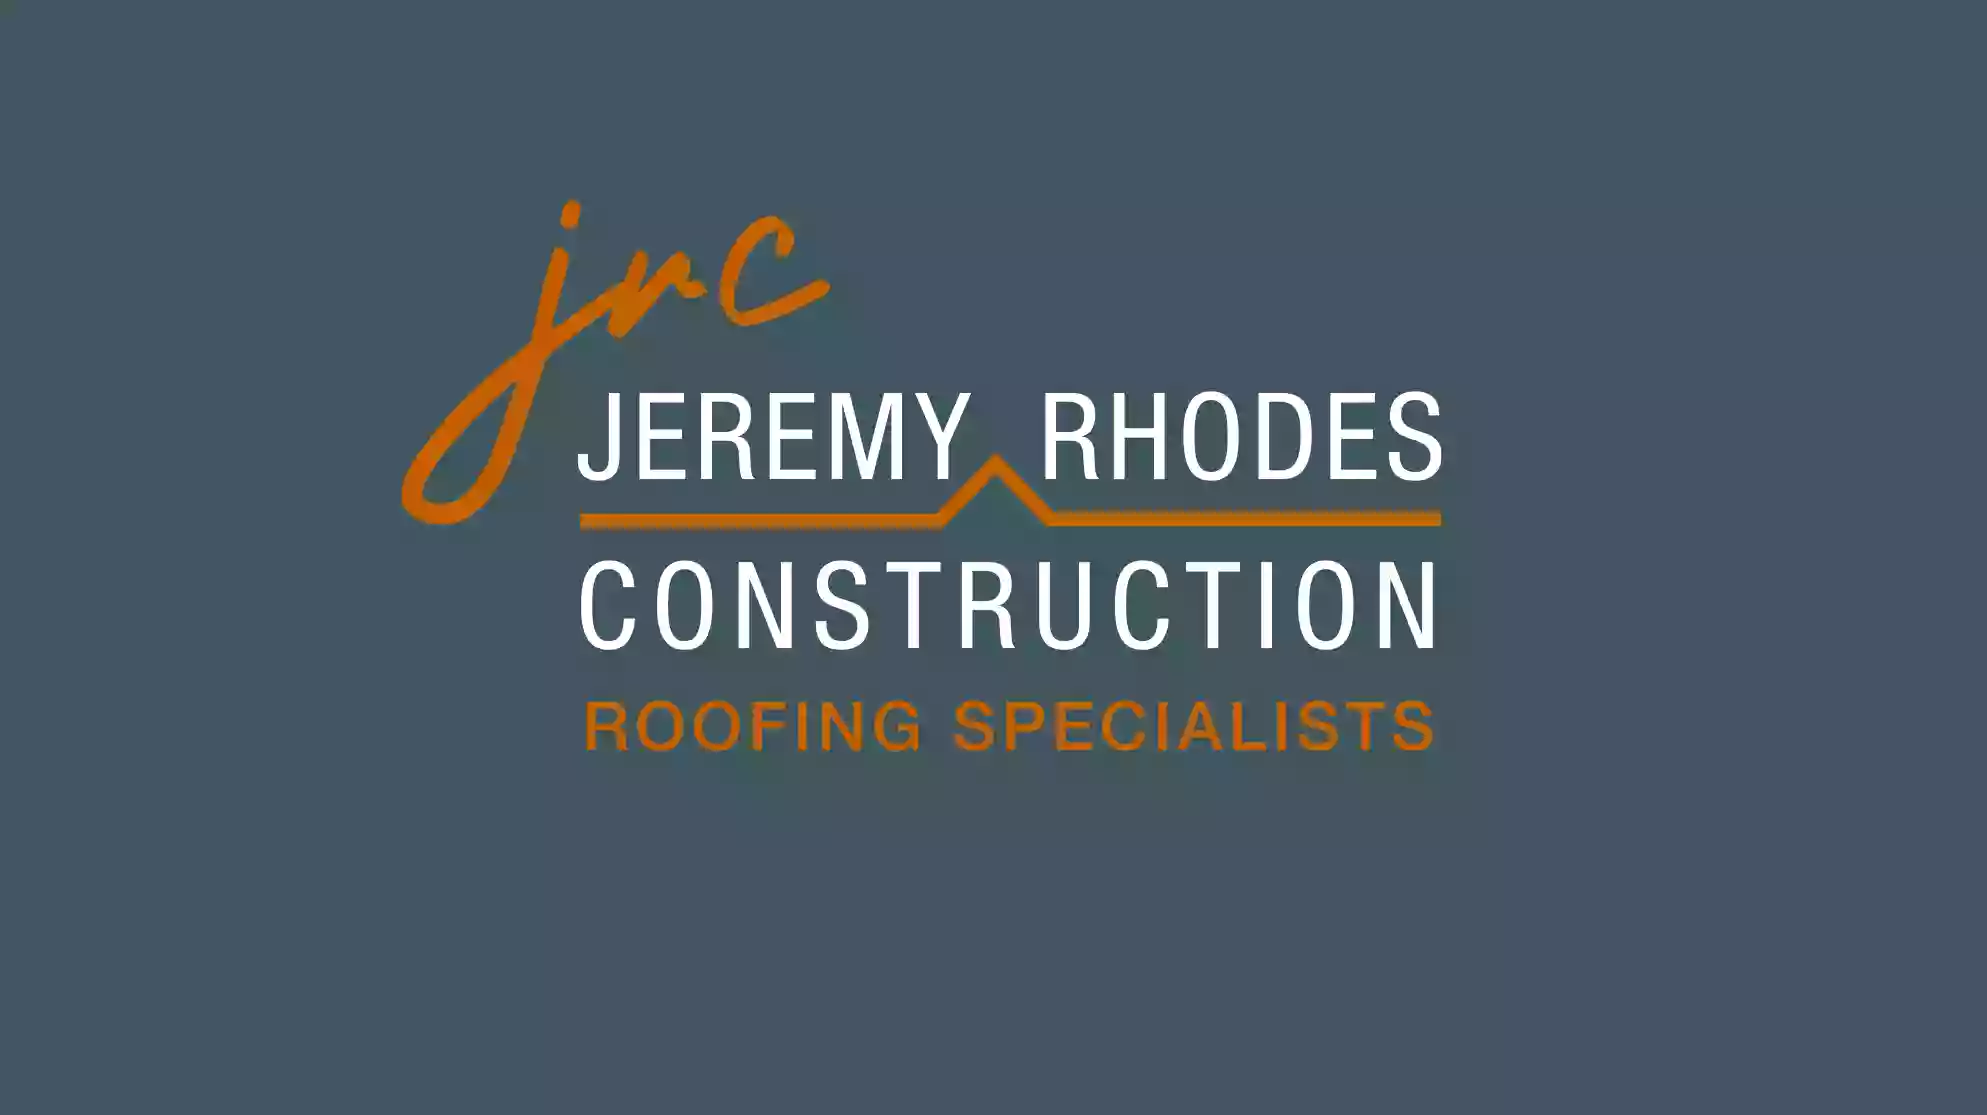 Jeremy Rhodes Construction